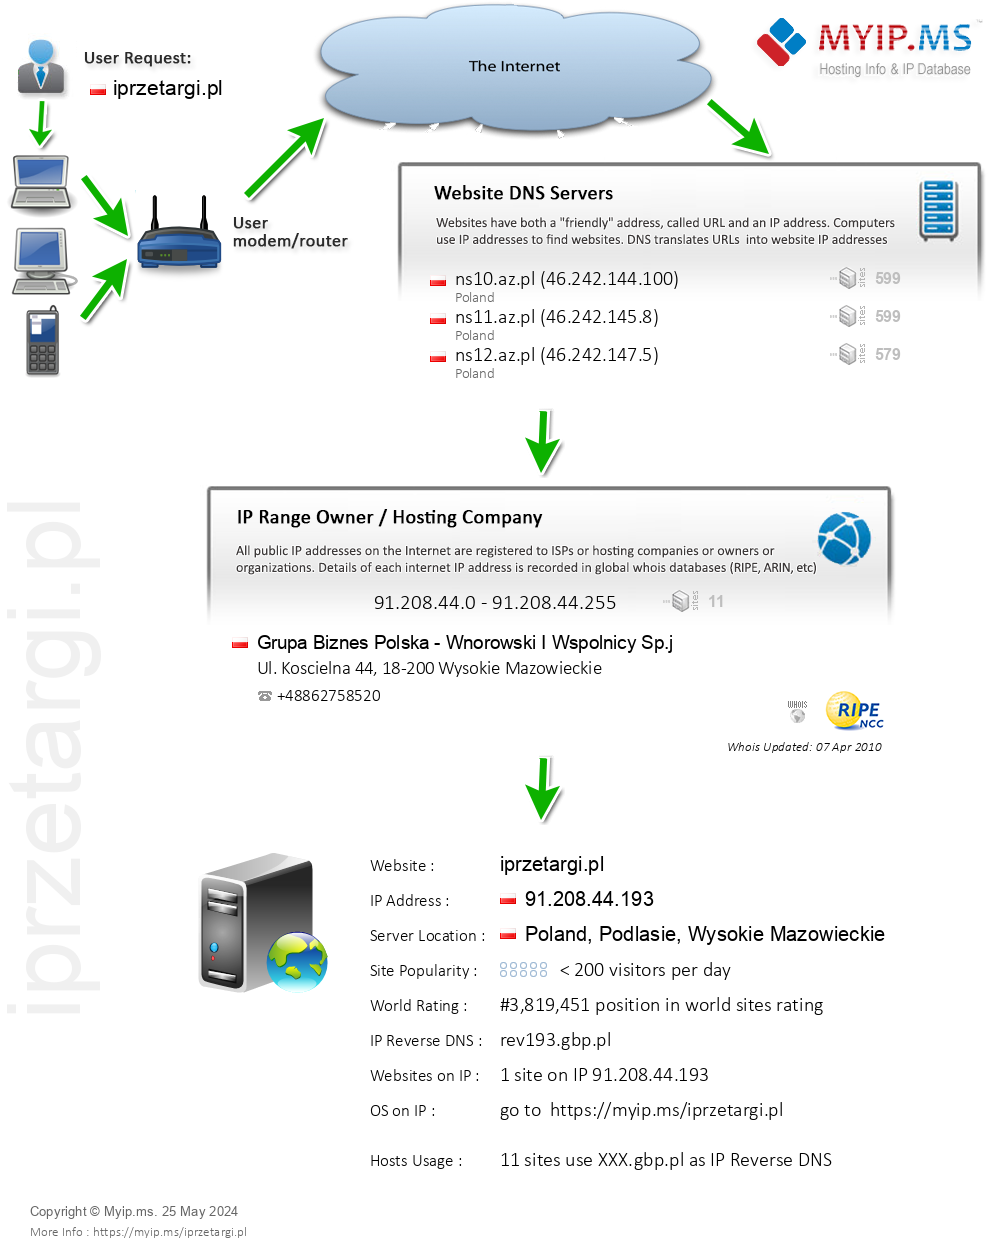 Iprzetargi.pl - Website Hosting Visual IP Diagram